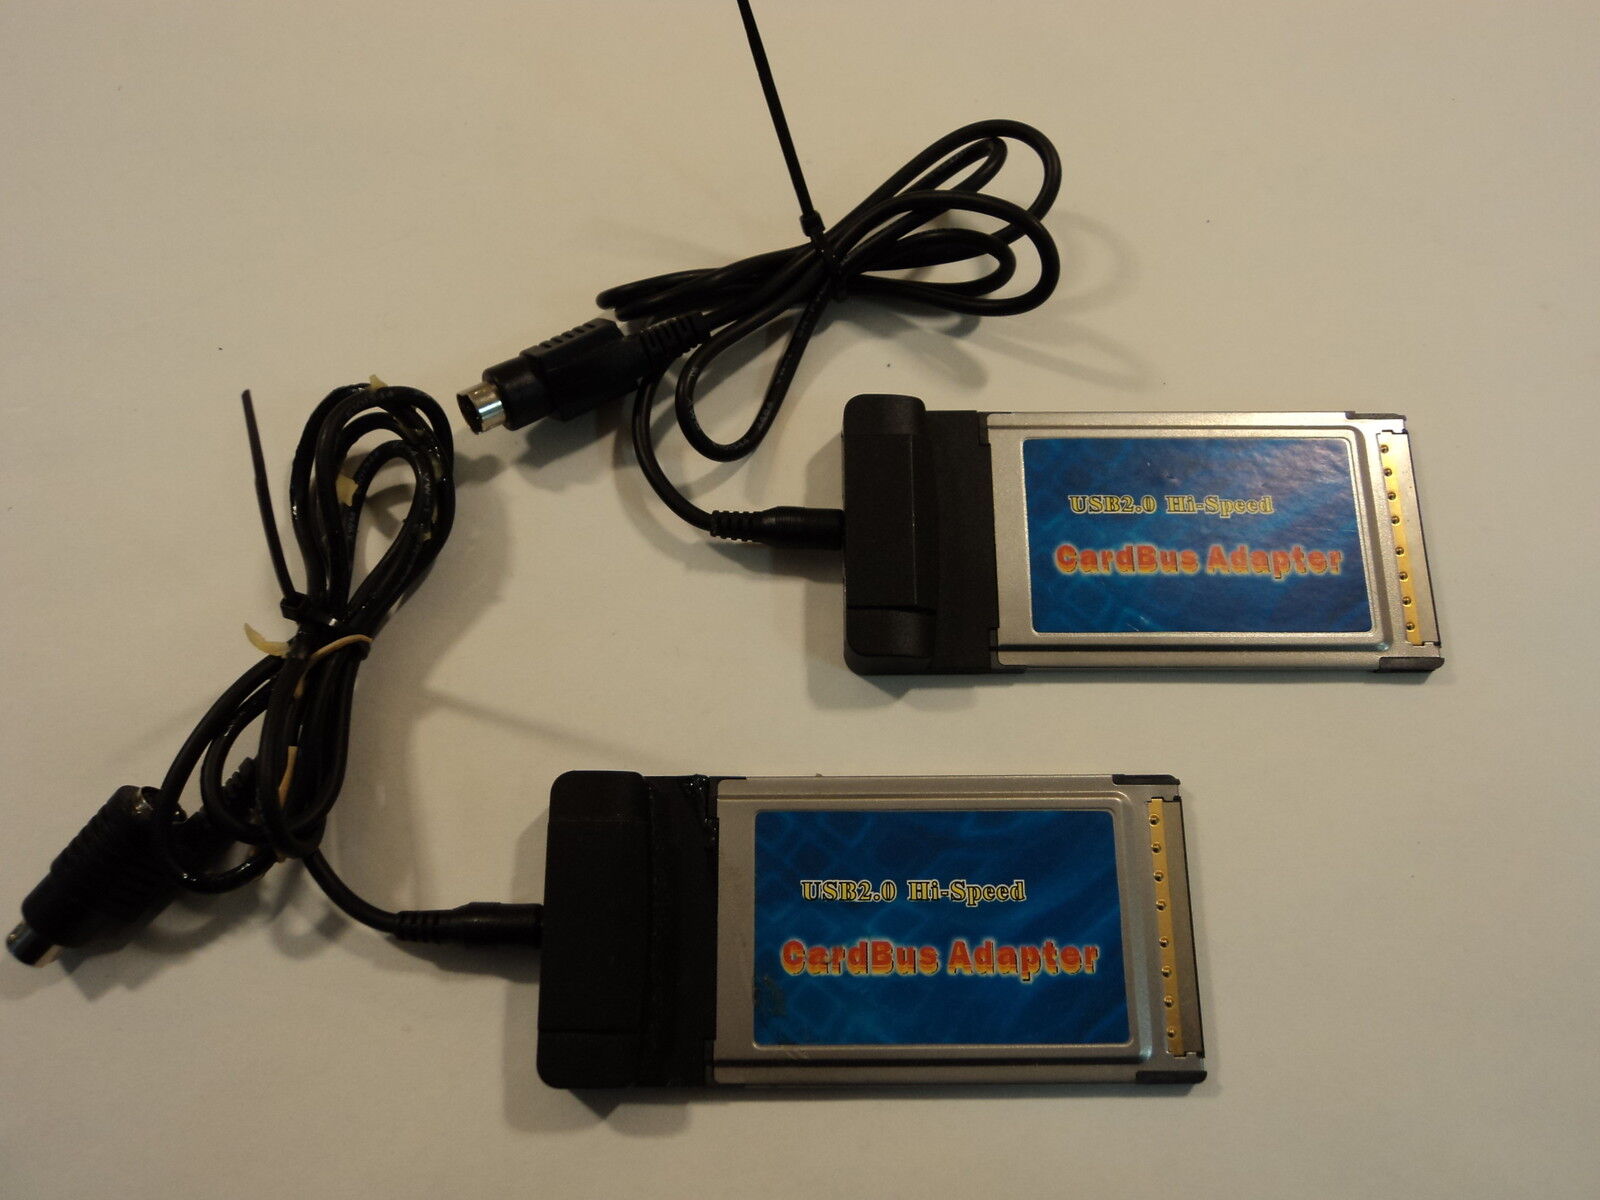 Standard USB2.0 Hi Speed CardBus Adaptor Lot of 2